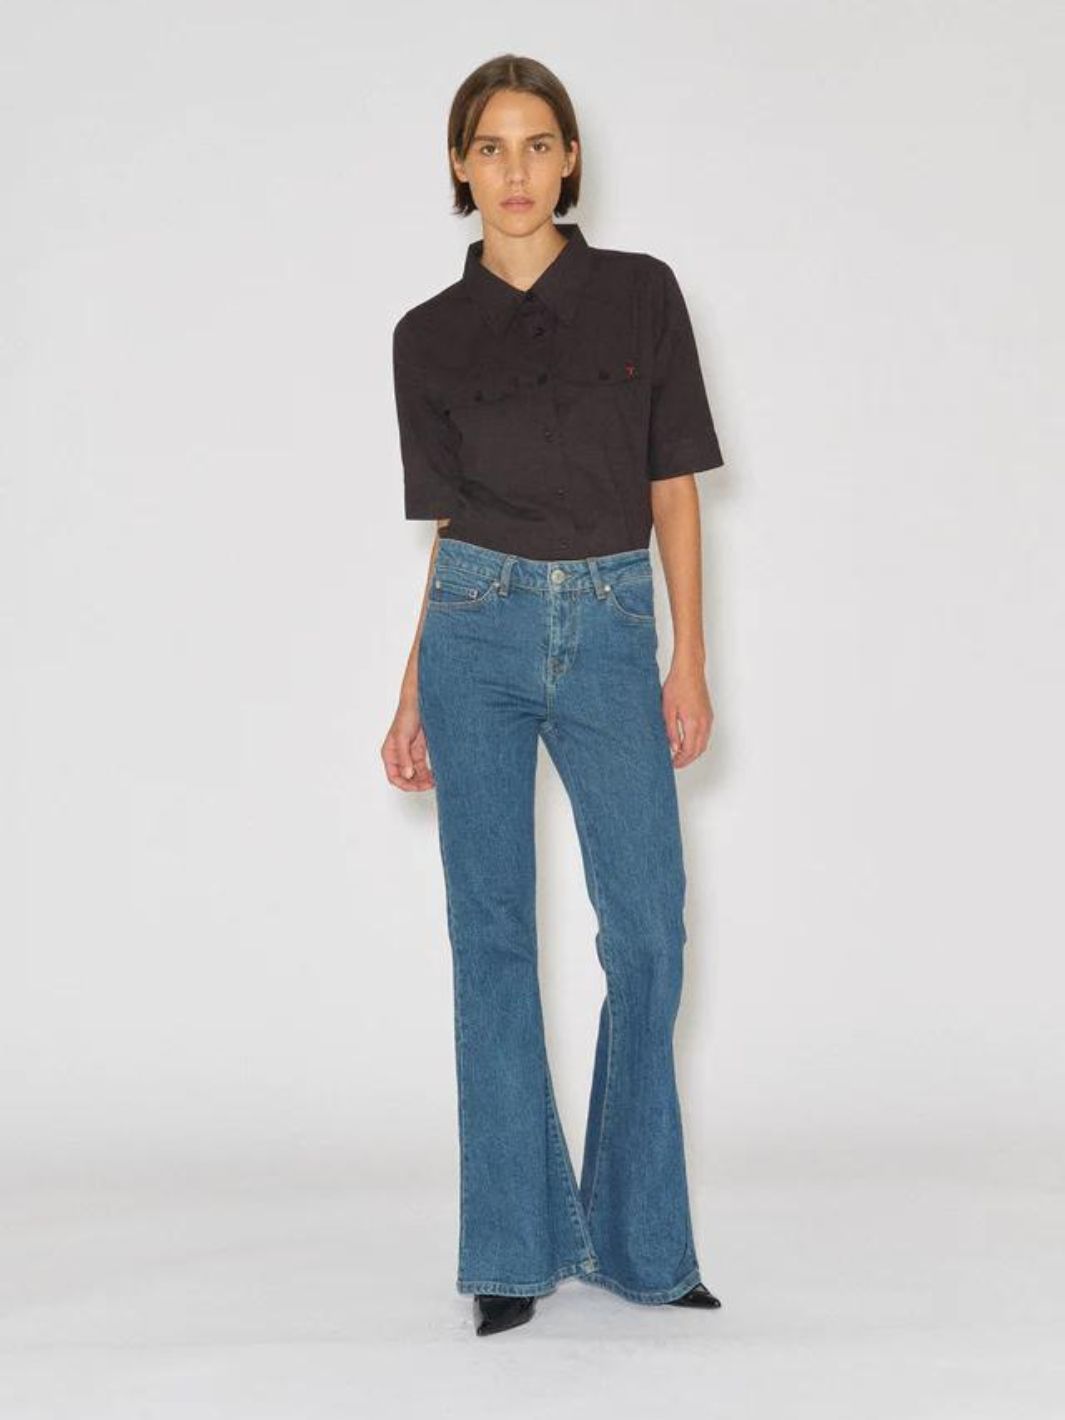 Tomorrow Jeans Jeans | Jenna Low Waist Jeans Phonix